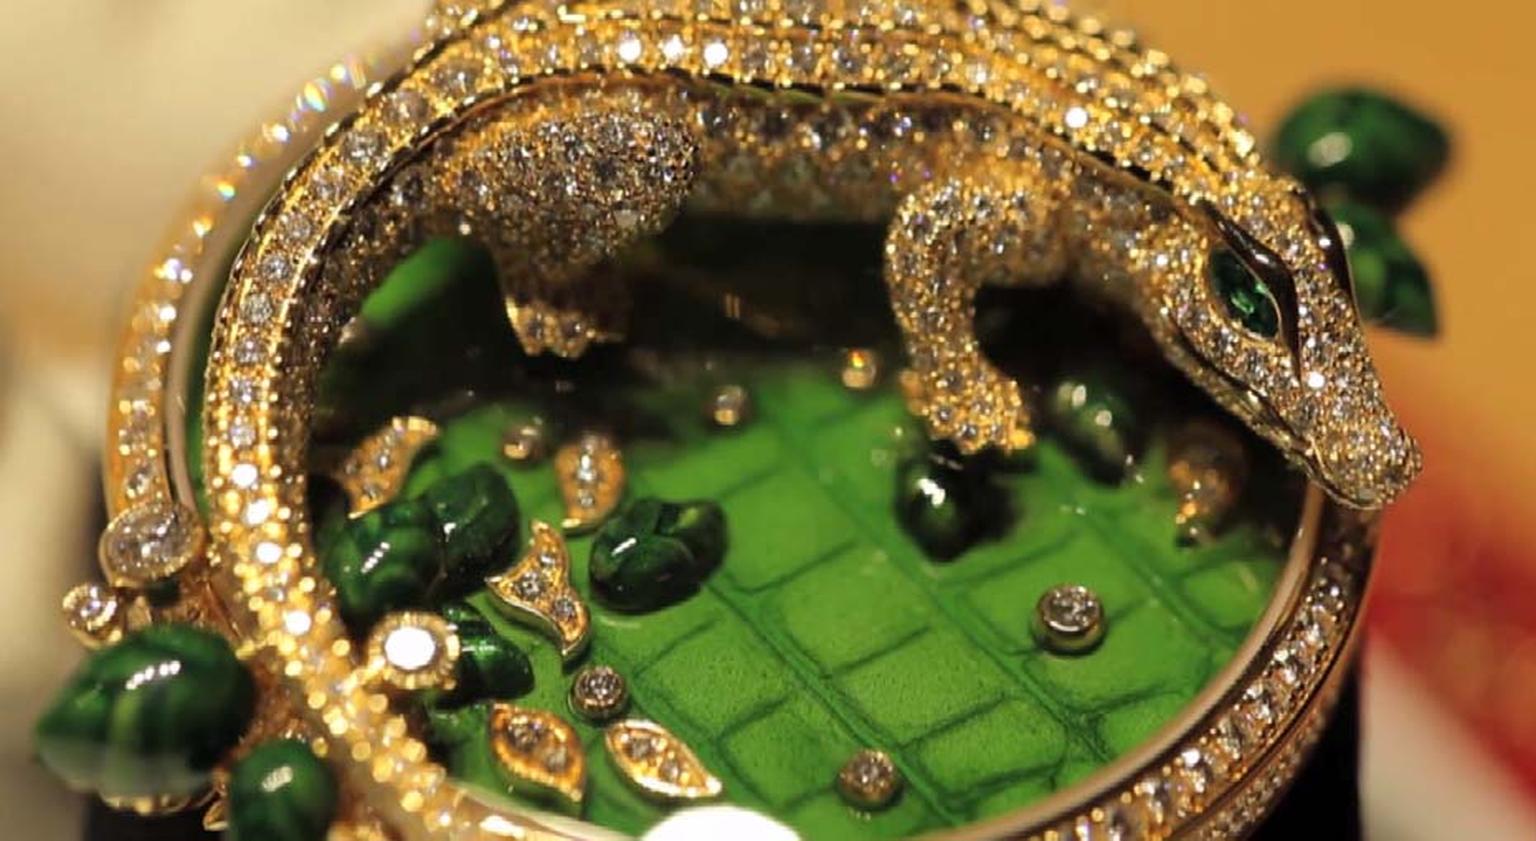 Cartier's Crocodile watch was inspired 